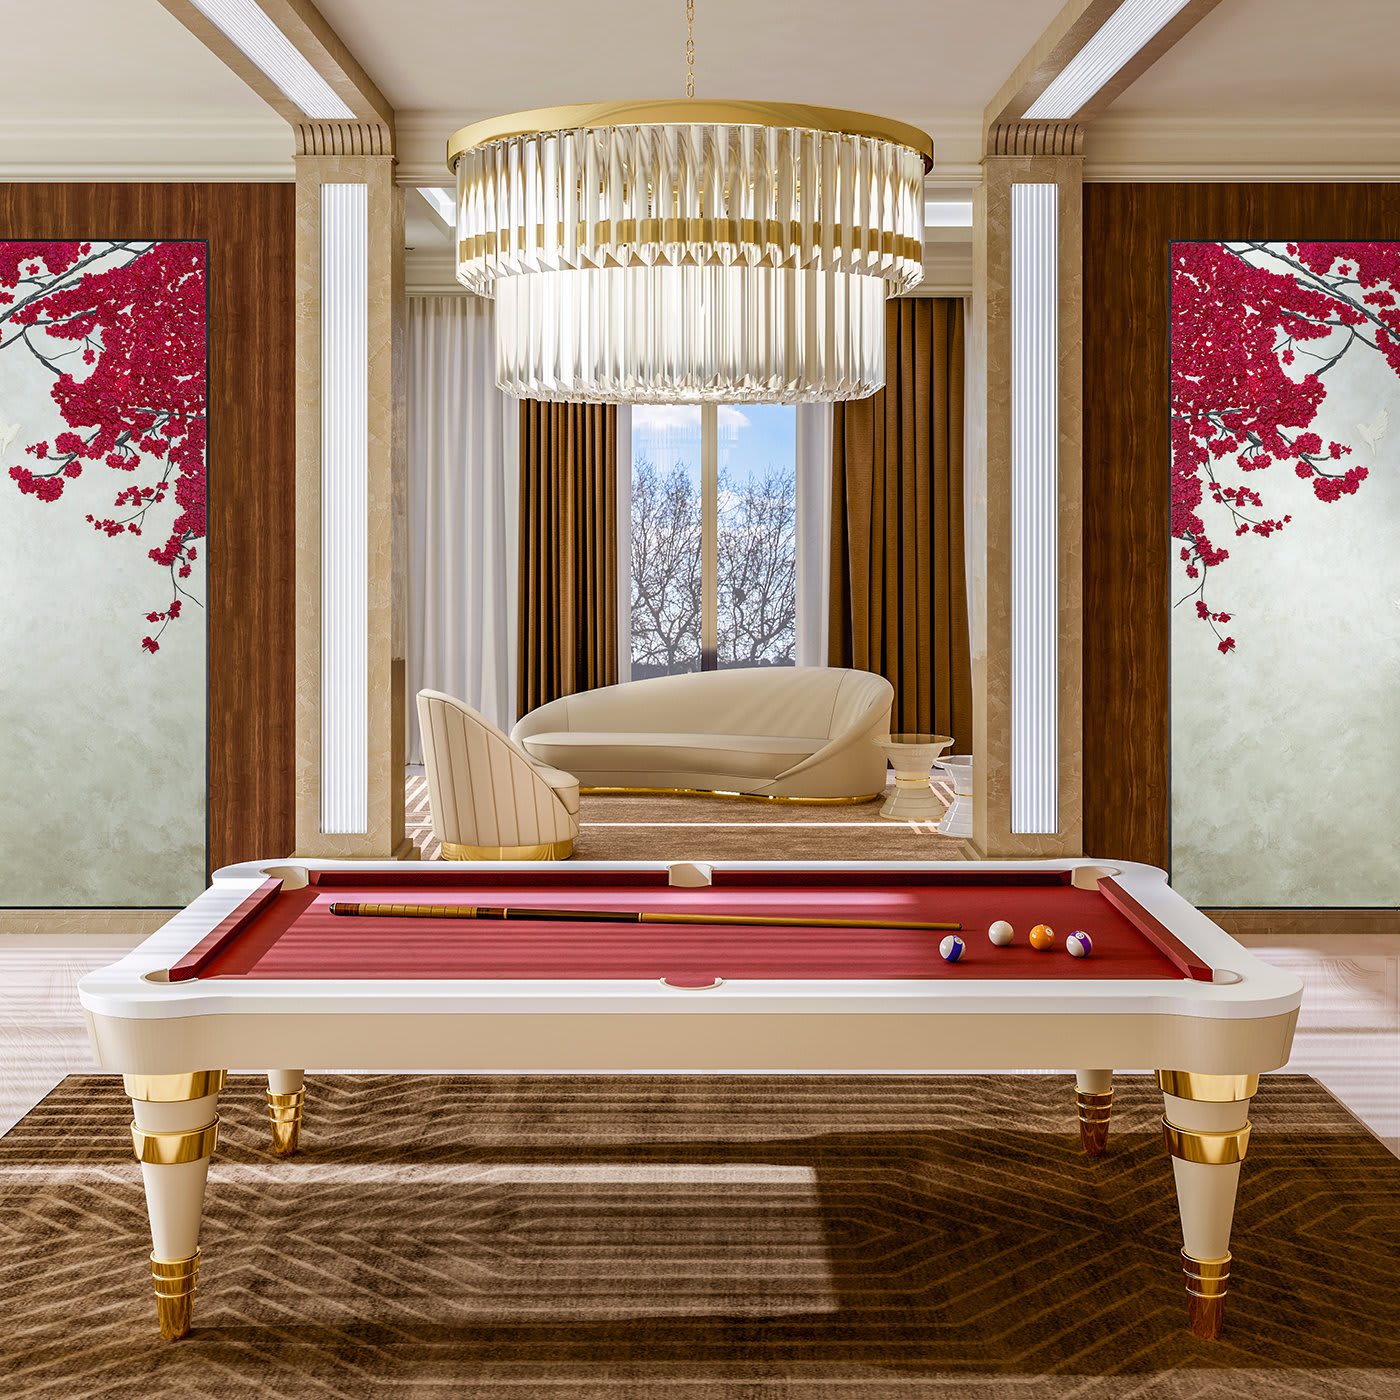 Regis burgundy pool table by Pino Vismara - Vismara